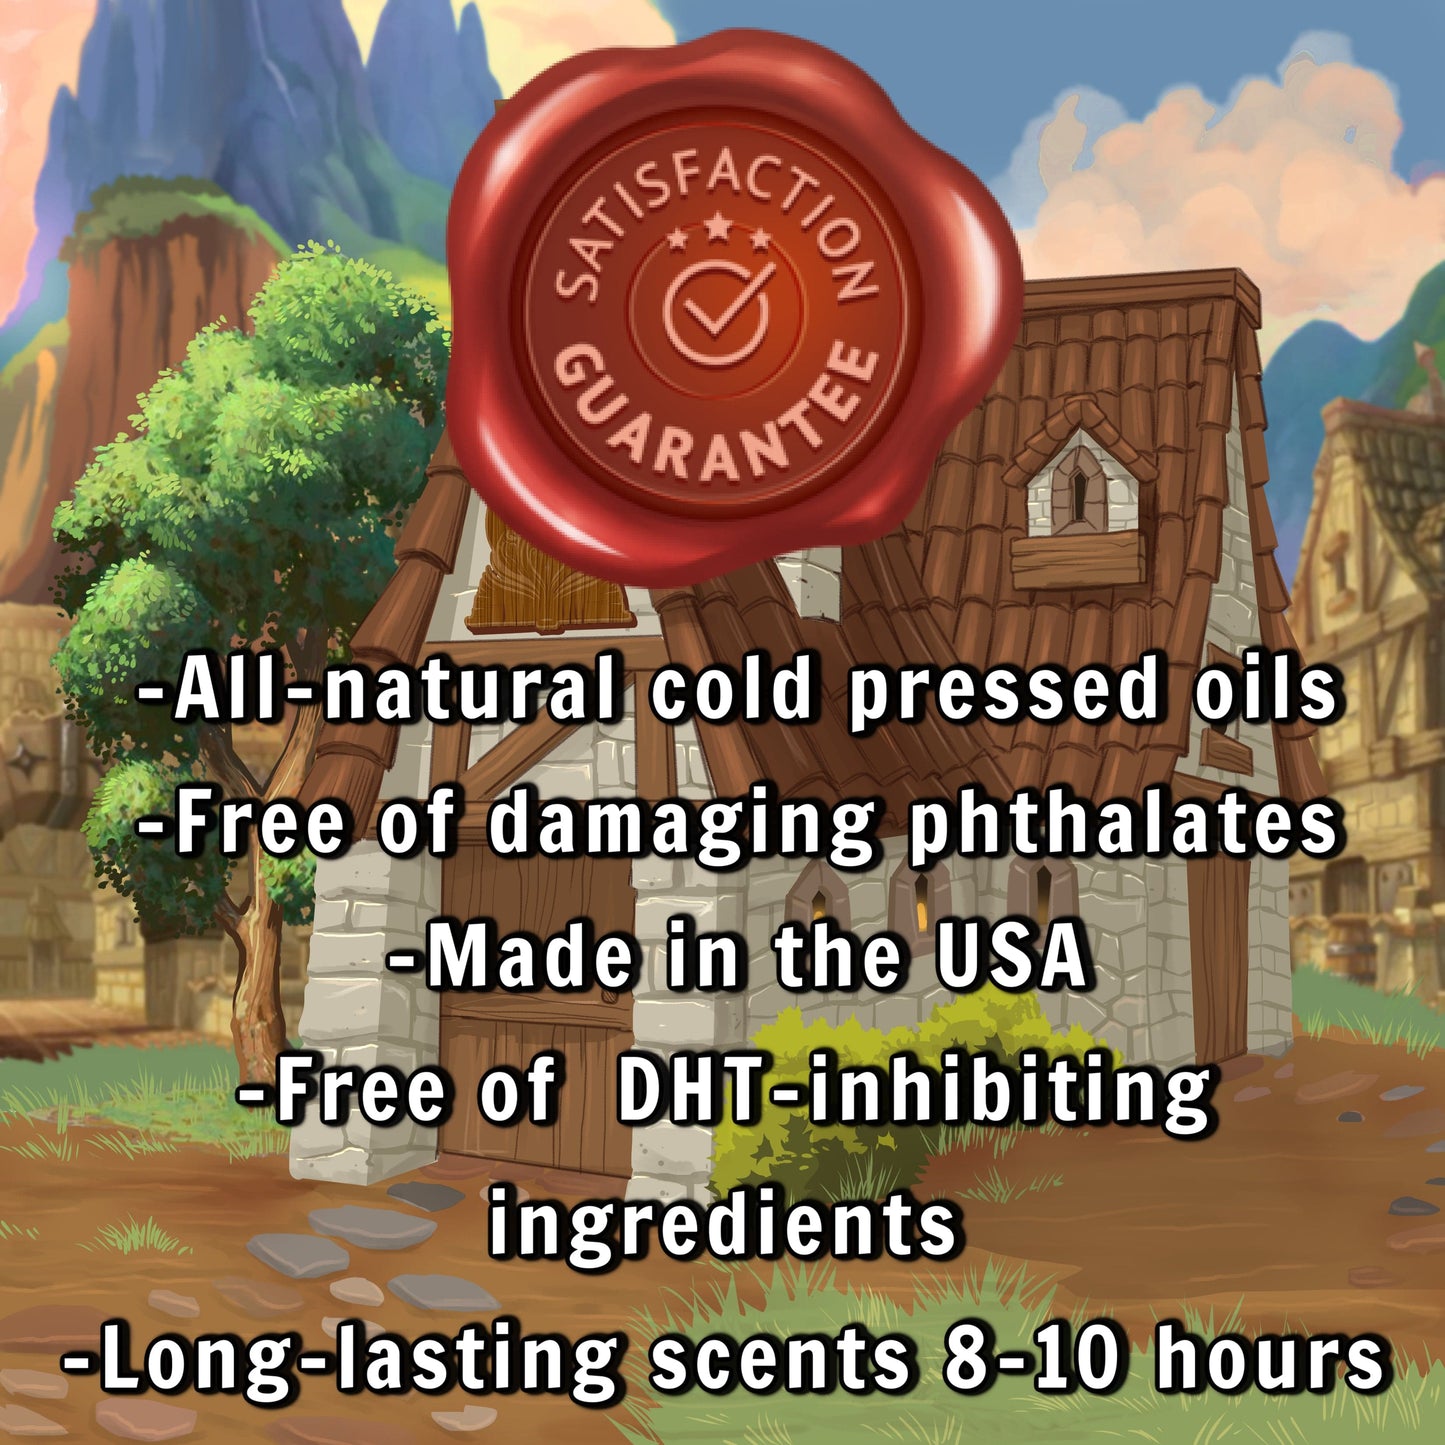 The Distiller - Beard Oil - Spiced Vanilla Bourbon